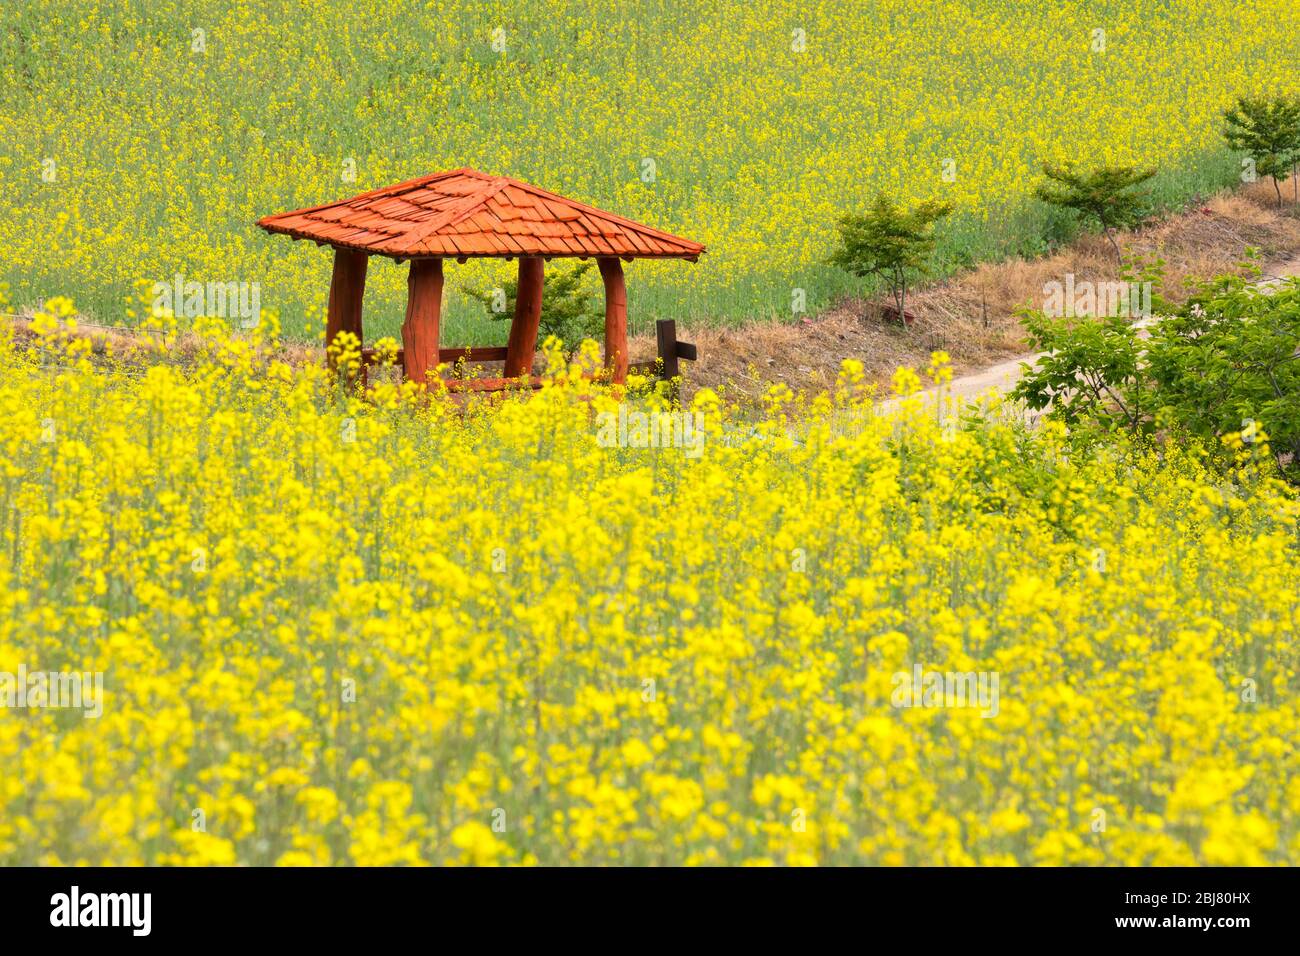 Rote Hütte in gelben Rapsblütenfeld Stockfoto